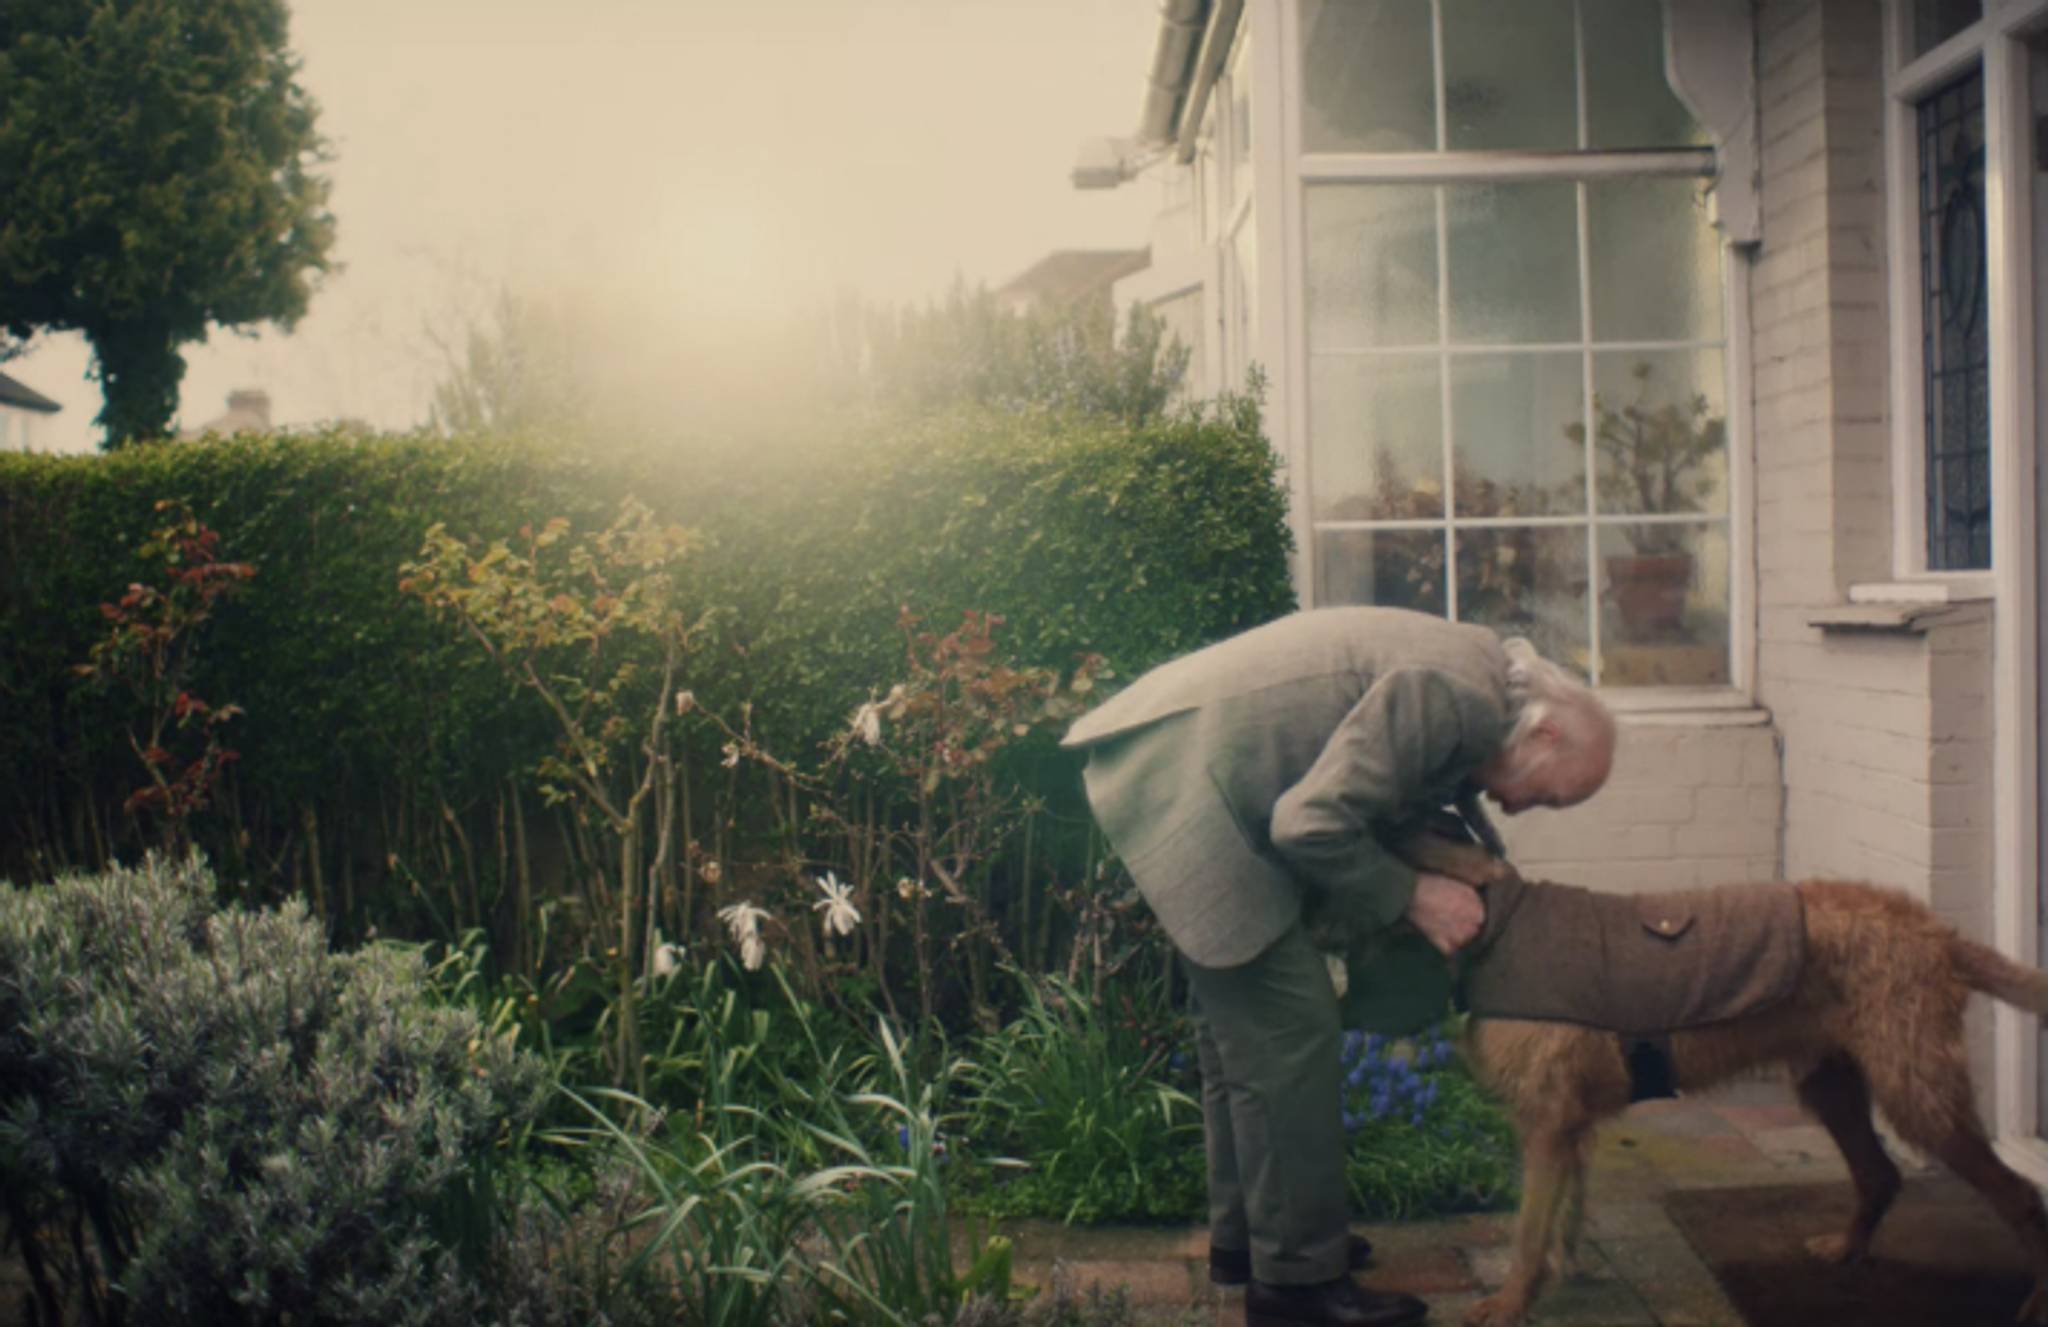 Pedigree's 'dog date' ad remedies Senior loneliness